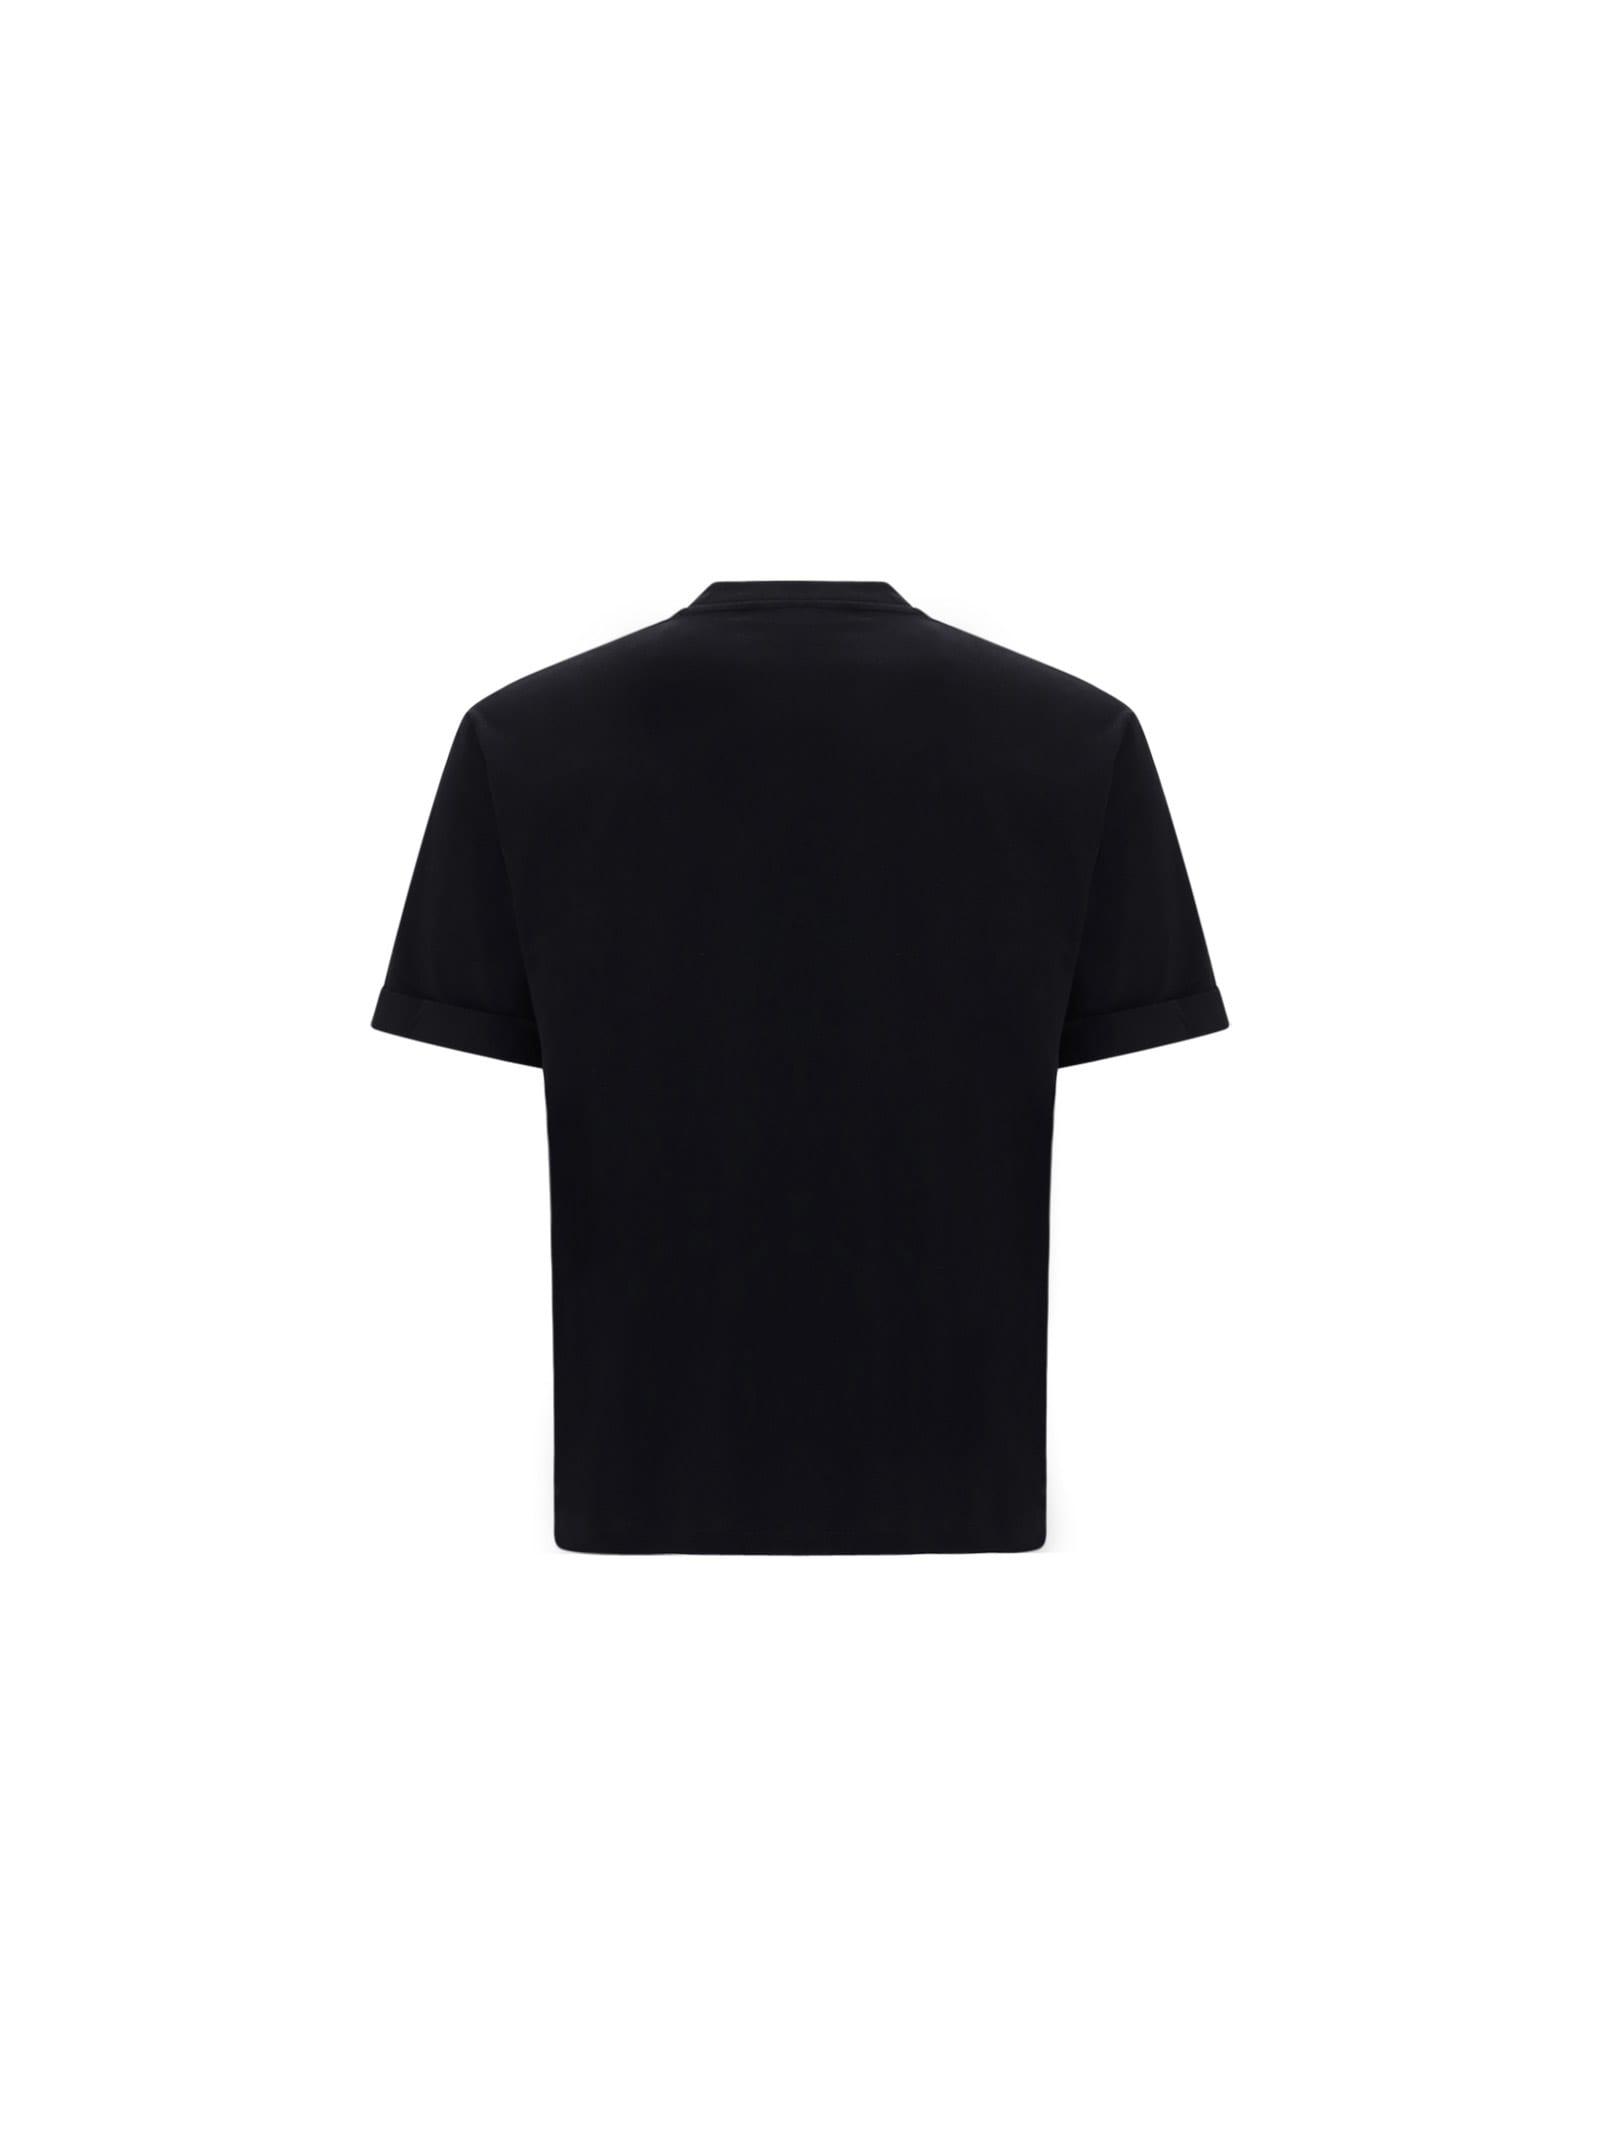 Neil Barrett Hermitage Hercules T-shirt in Black for Men | Lyst